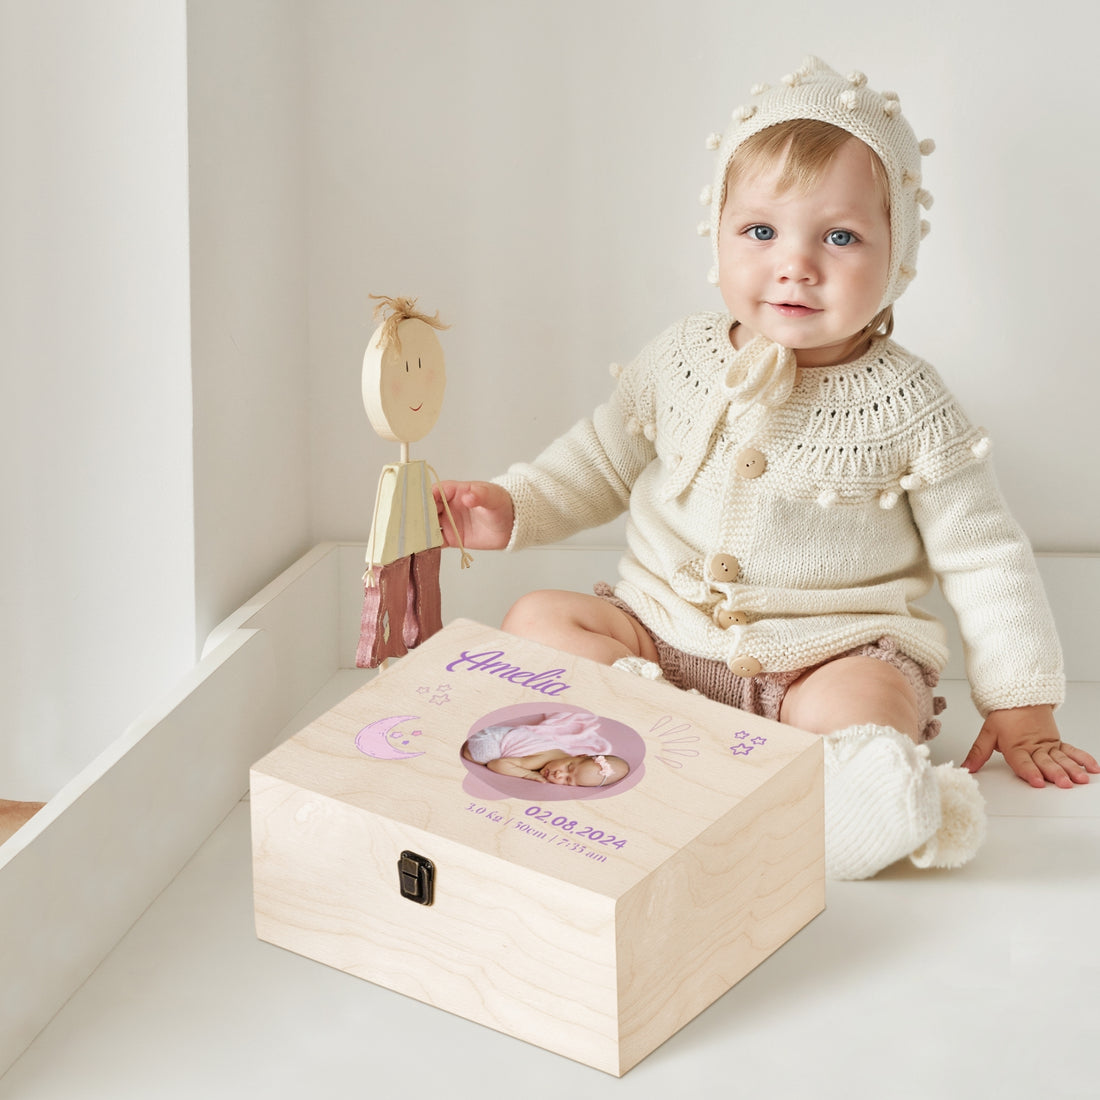 Personalised Baby Photo Wooden Keepsake Box, Custom Print Engraved Pine Memory Boxes, Treasure Storage, Nursery, Baptism First Birthday Gift